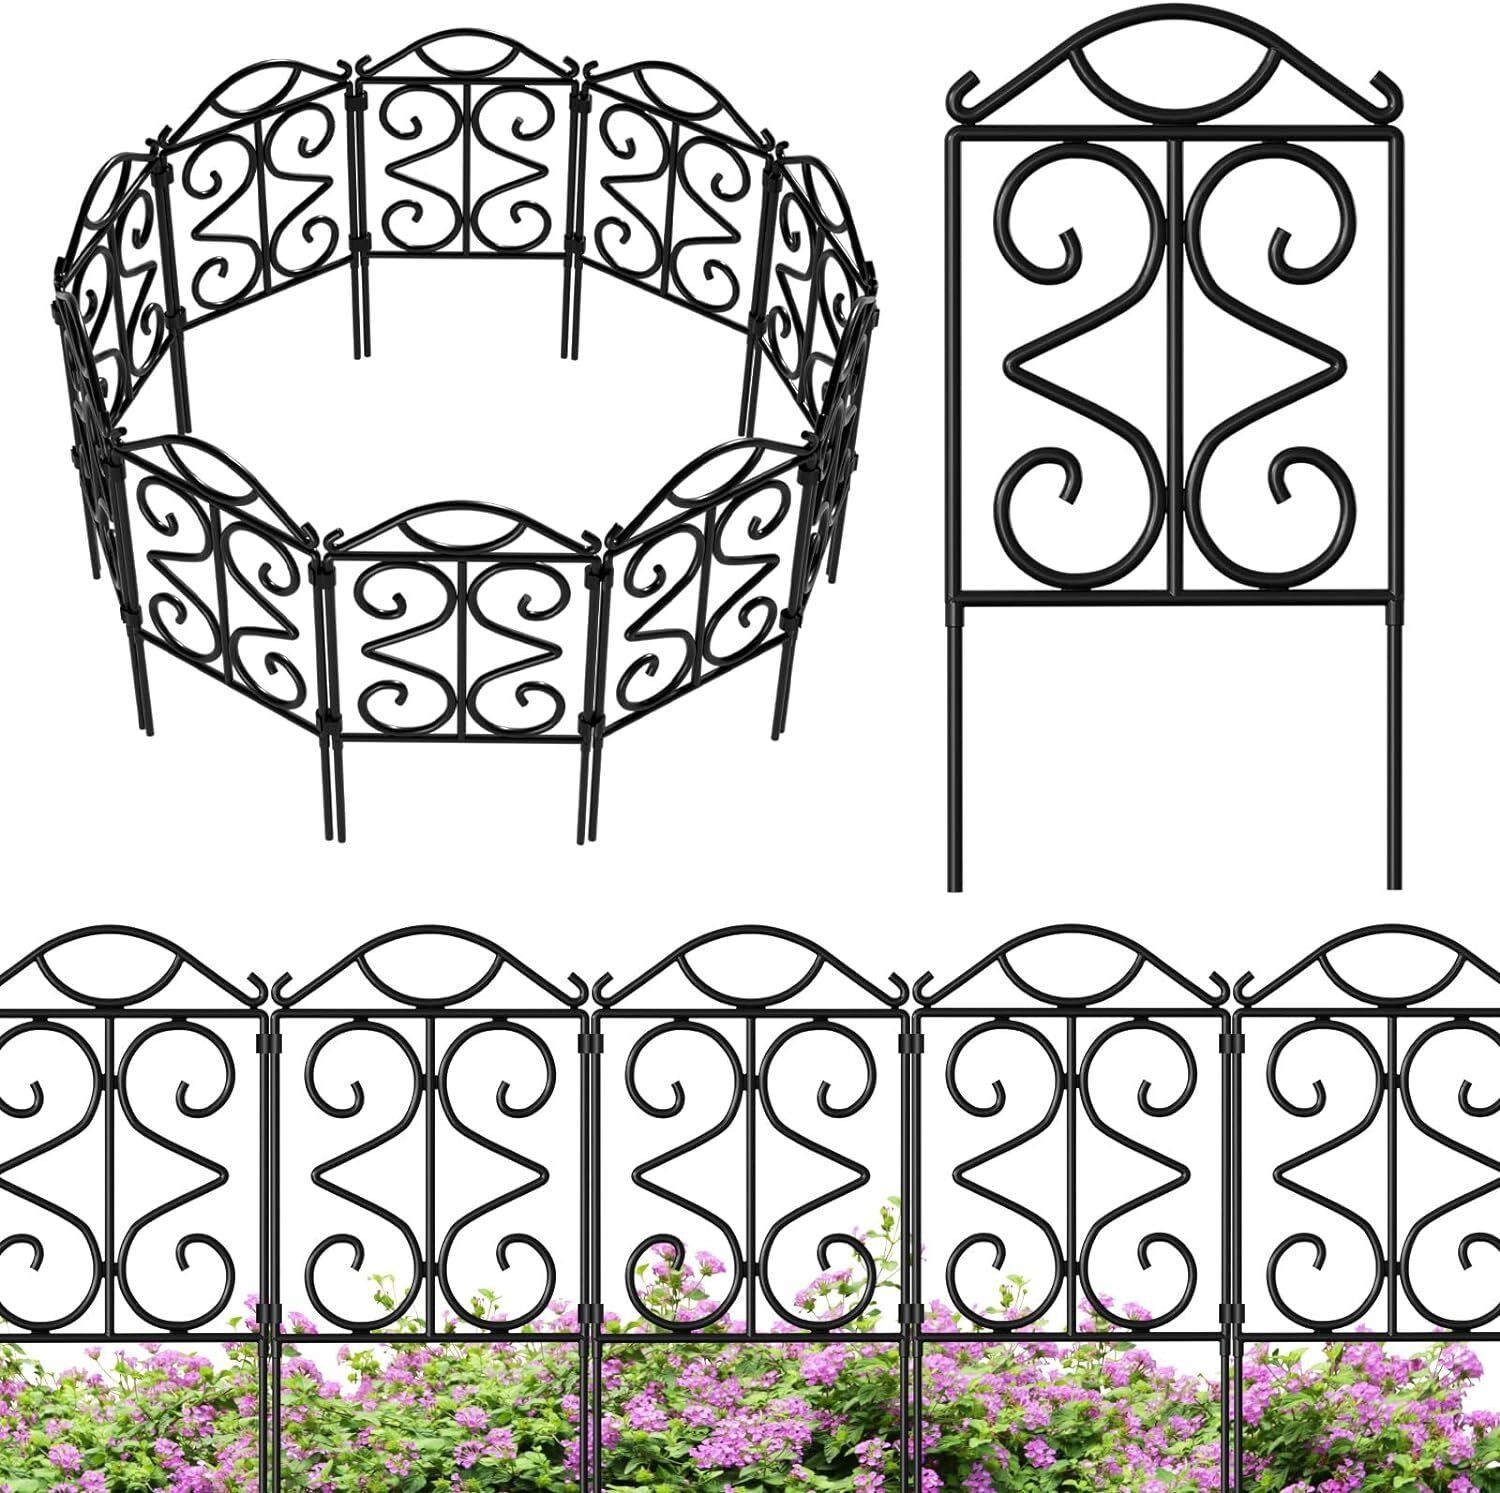 AMAGABELI GARDEN & HOME 10 Panels Decorative Garde